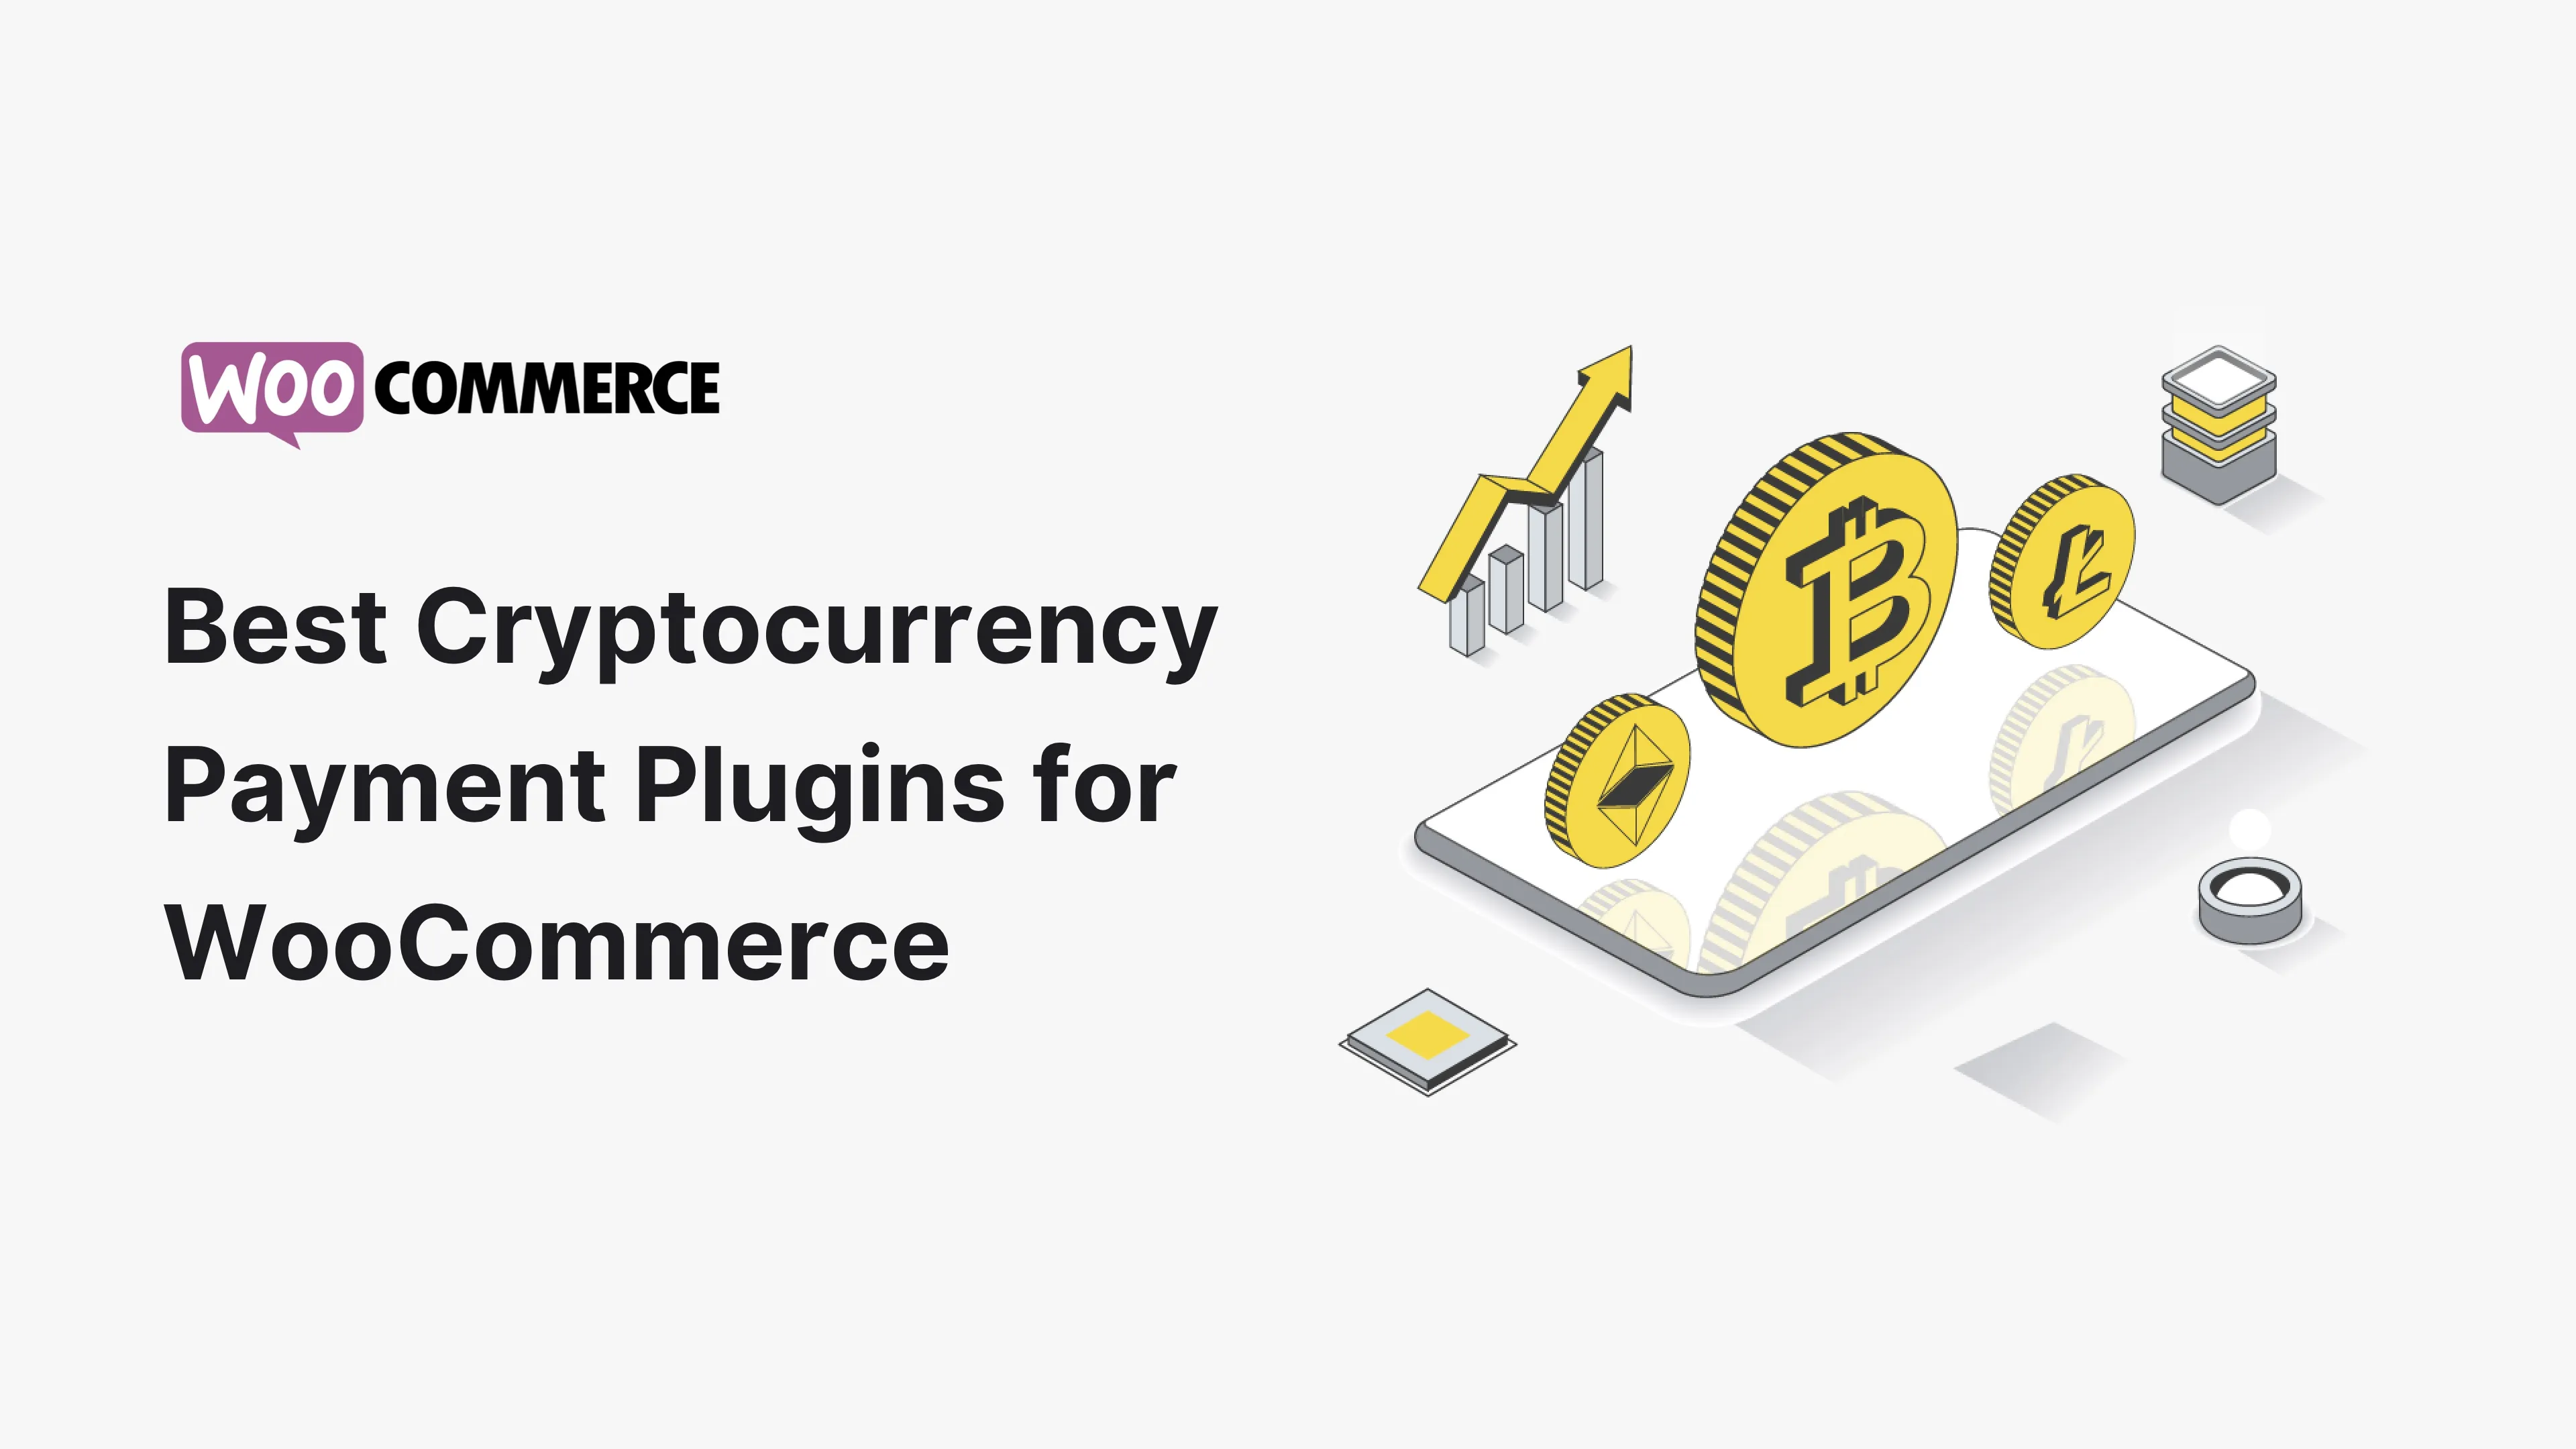 Melhores plugins de pagamento de criptomoeda para WooCommerce